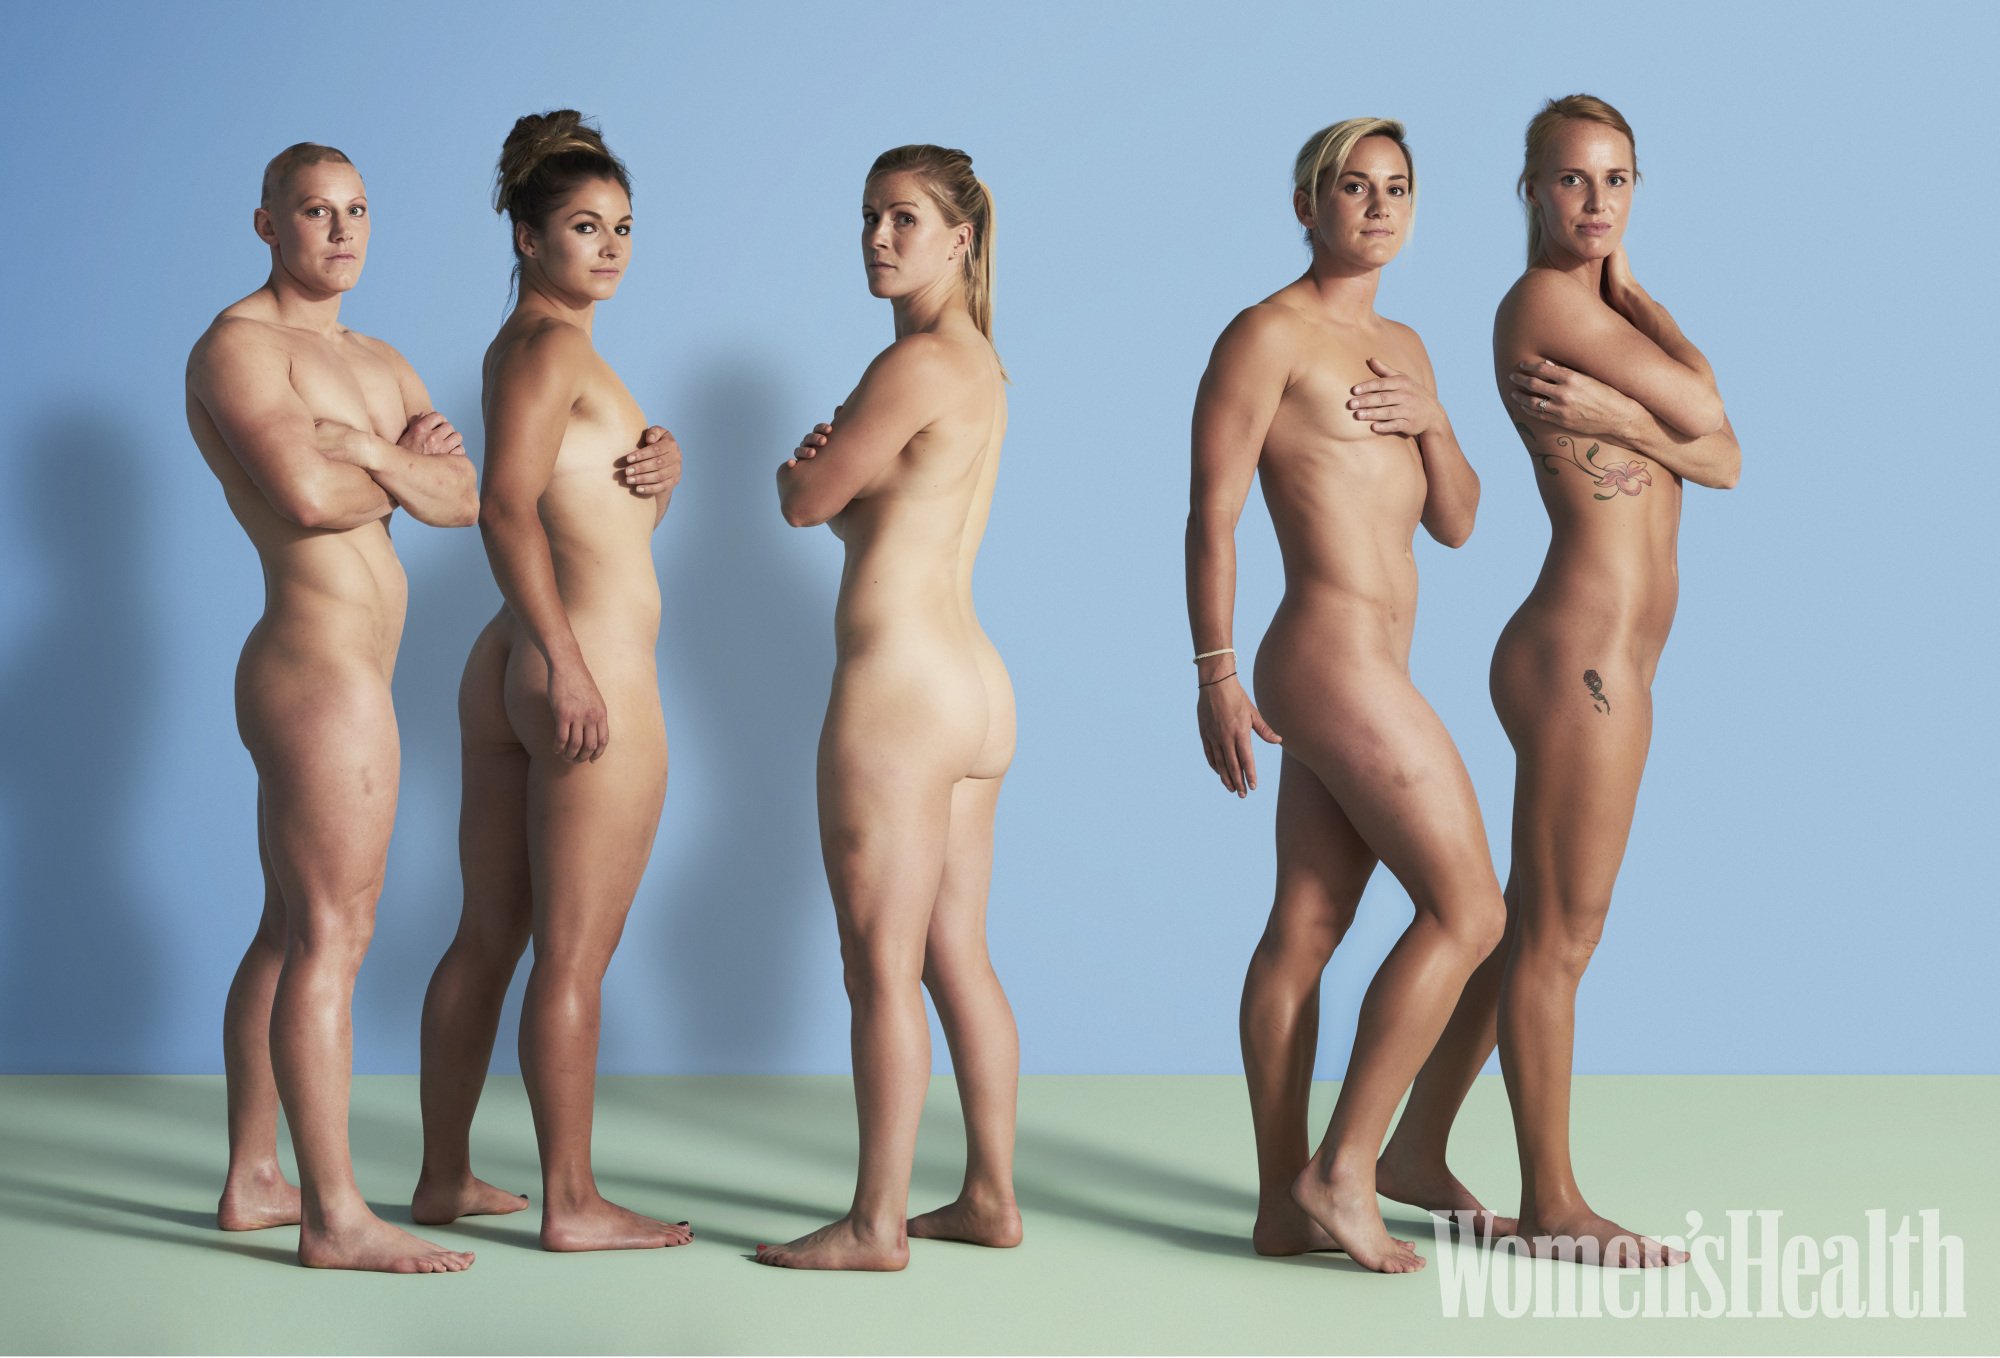 dave perrelli add women athletes nude photo